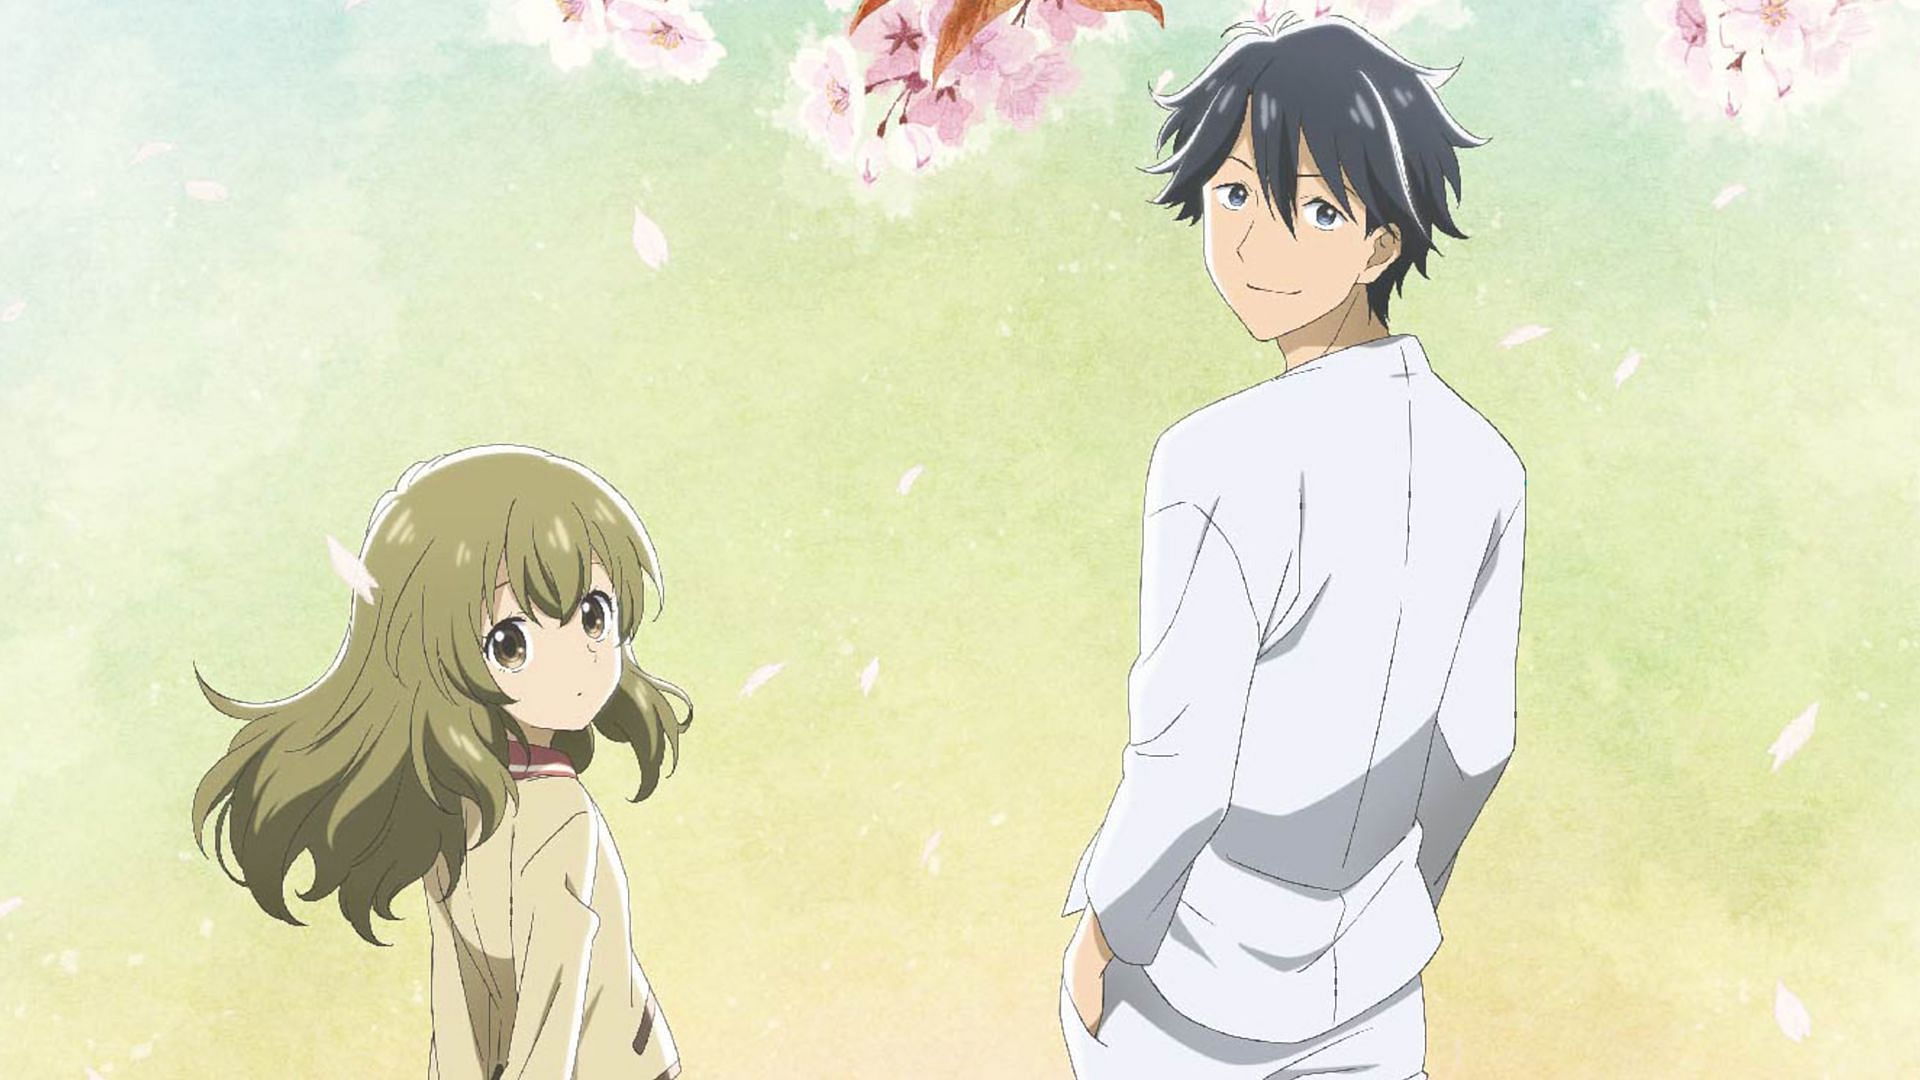 Itsuka and Nagomu as shown in the anime (Image via Deaimon)